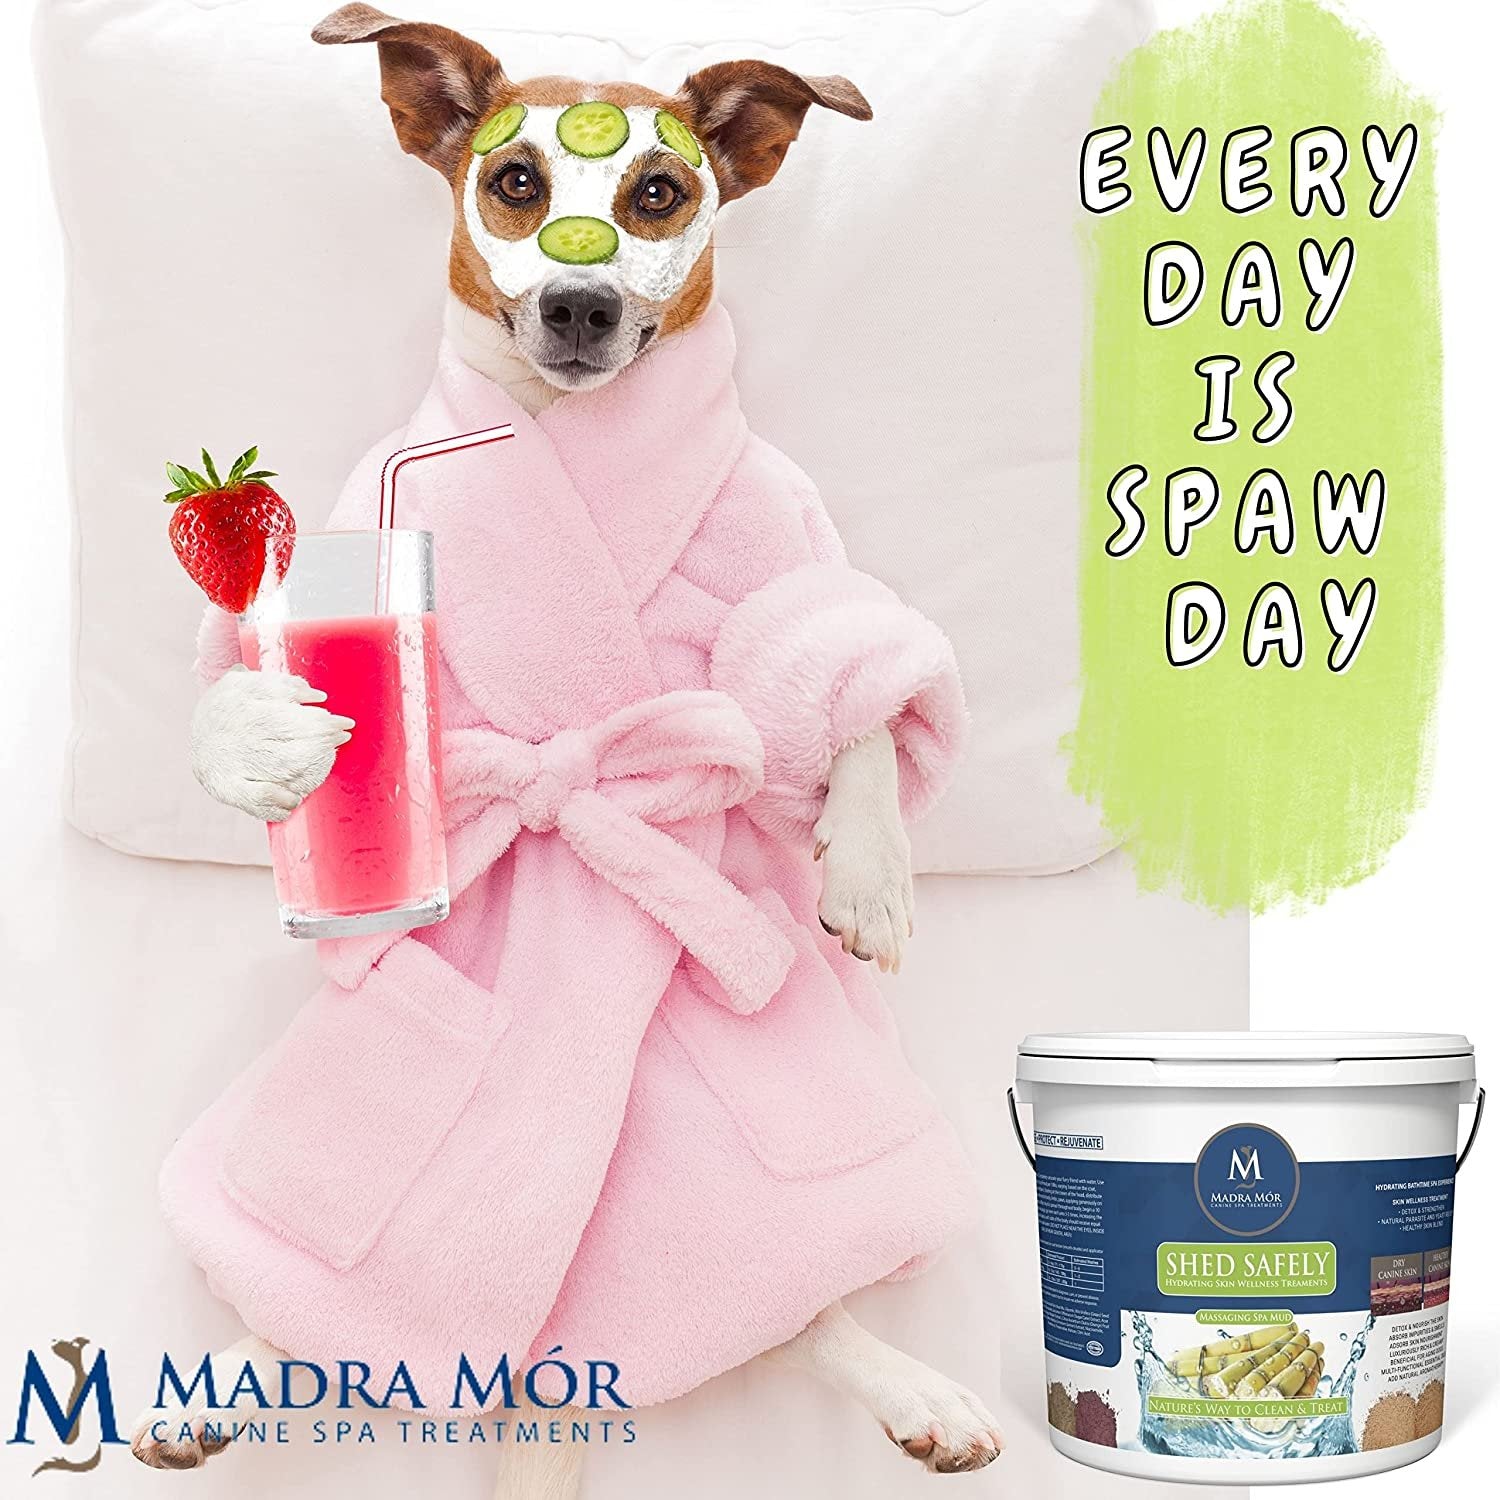 Madra Mor Shed Safely Dog Essentials Mud Bath | Dog Grooming Dog Wash | Dry Skin for Dogs Treatment | Dog Bath Spa Treatment | Dog Itch Relief | 7.5lb Pail w Worldwide Nutrition Multipurpose Keychain